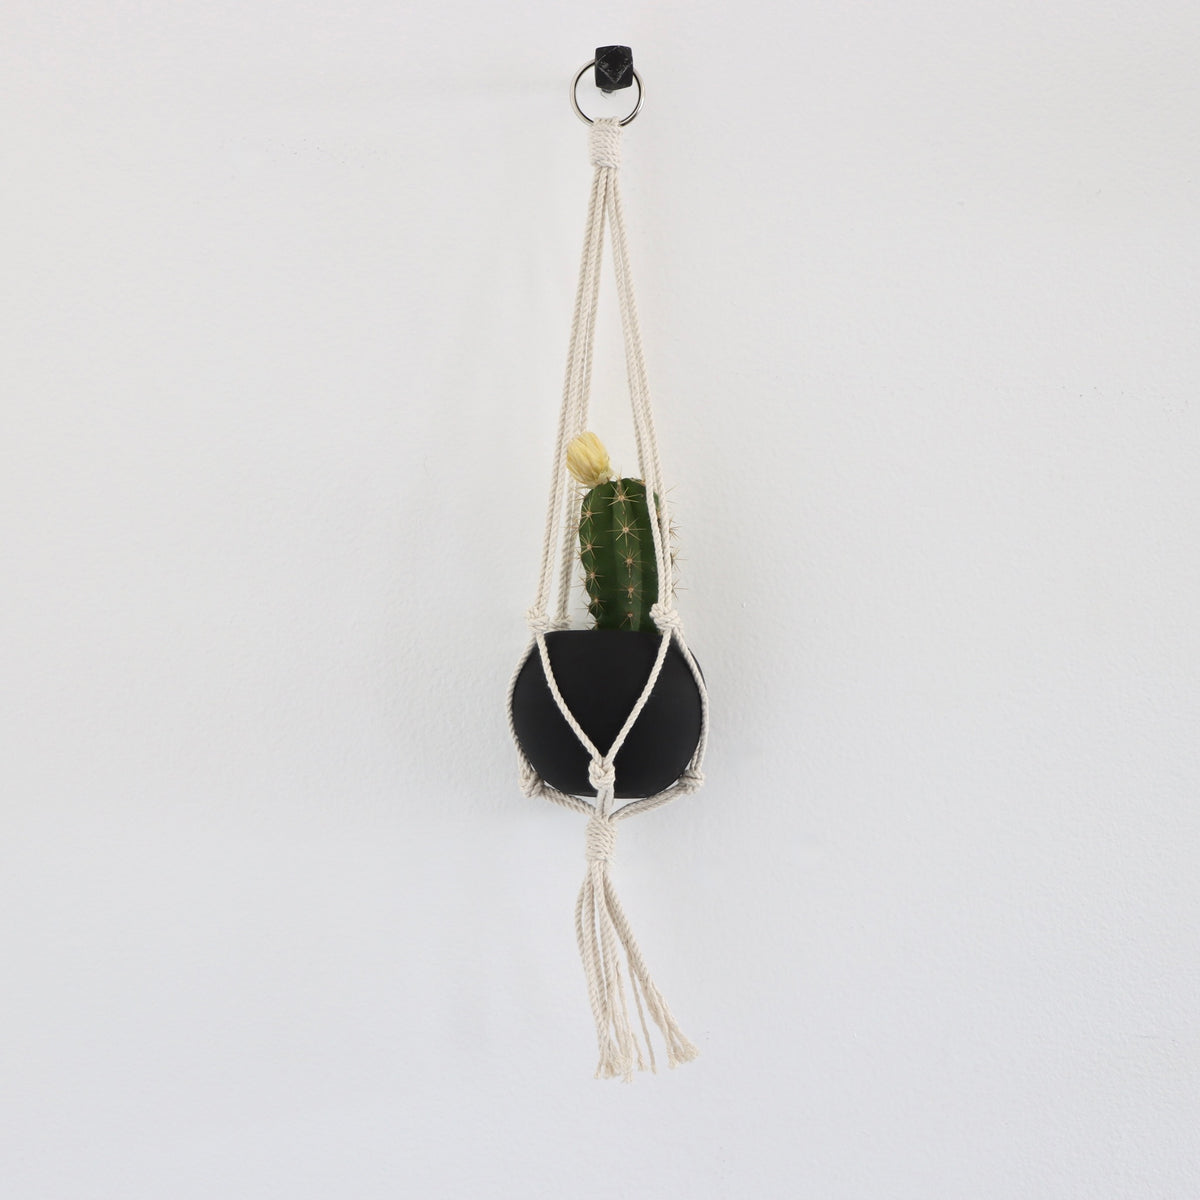 Black Orbit Mini Terracotta Planter with Macrame Hanger - Holistic Habitat 